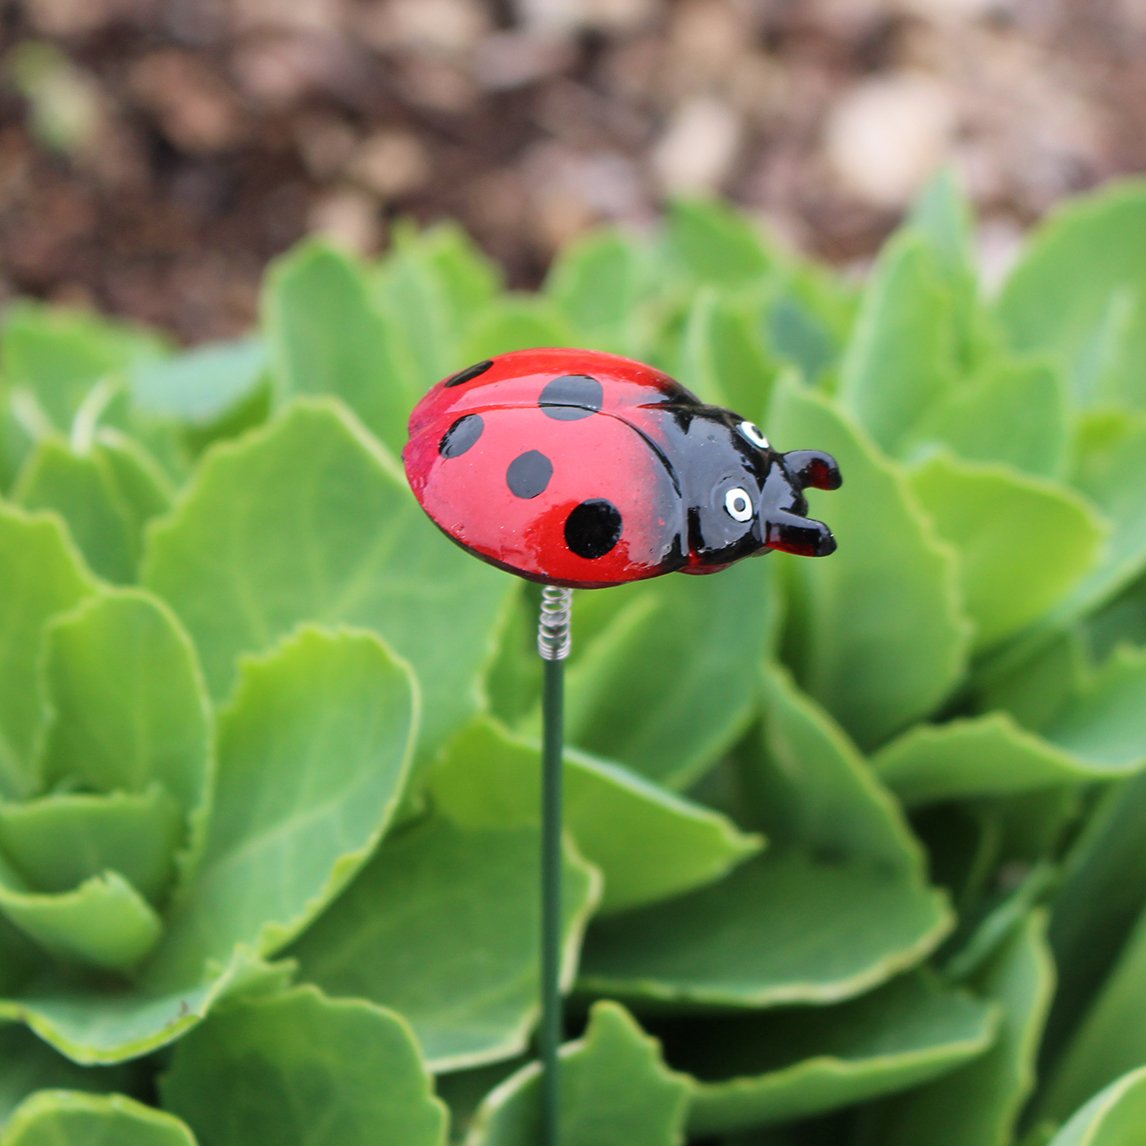 Ladybird on a Stick